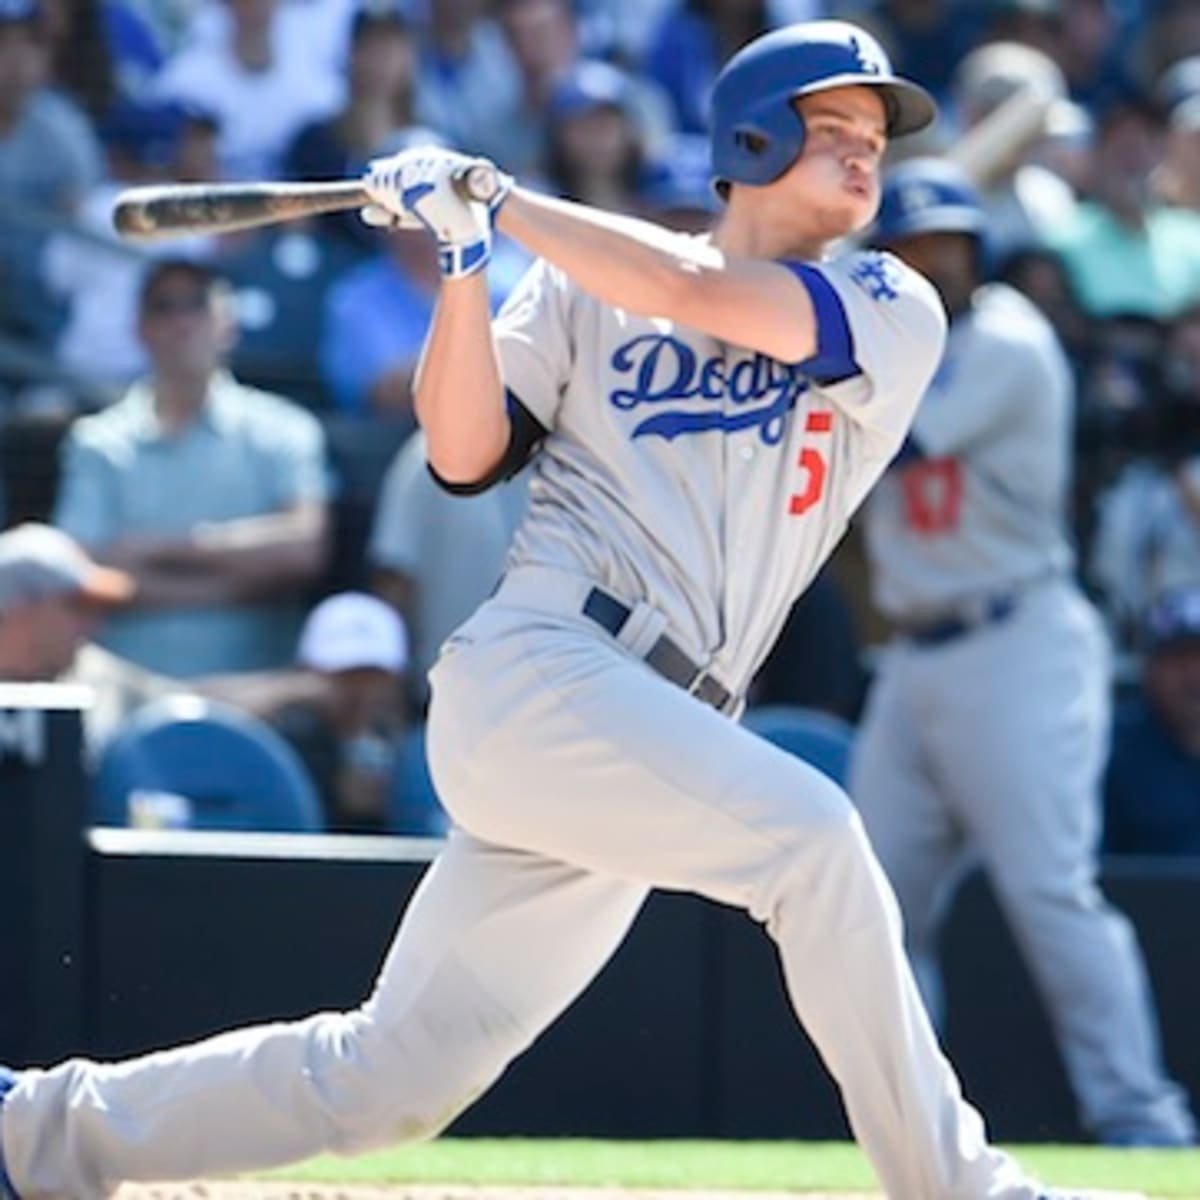 Dodgers News: Joc Pederson, Corey Seager And Trayce Thompson